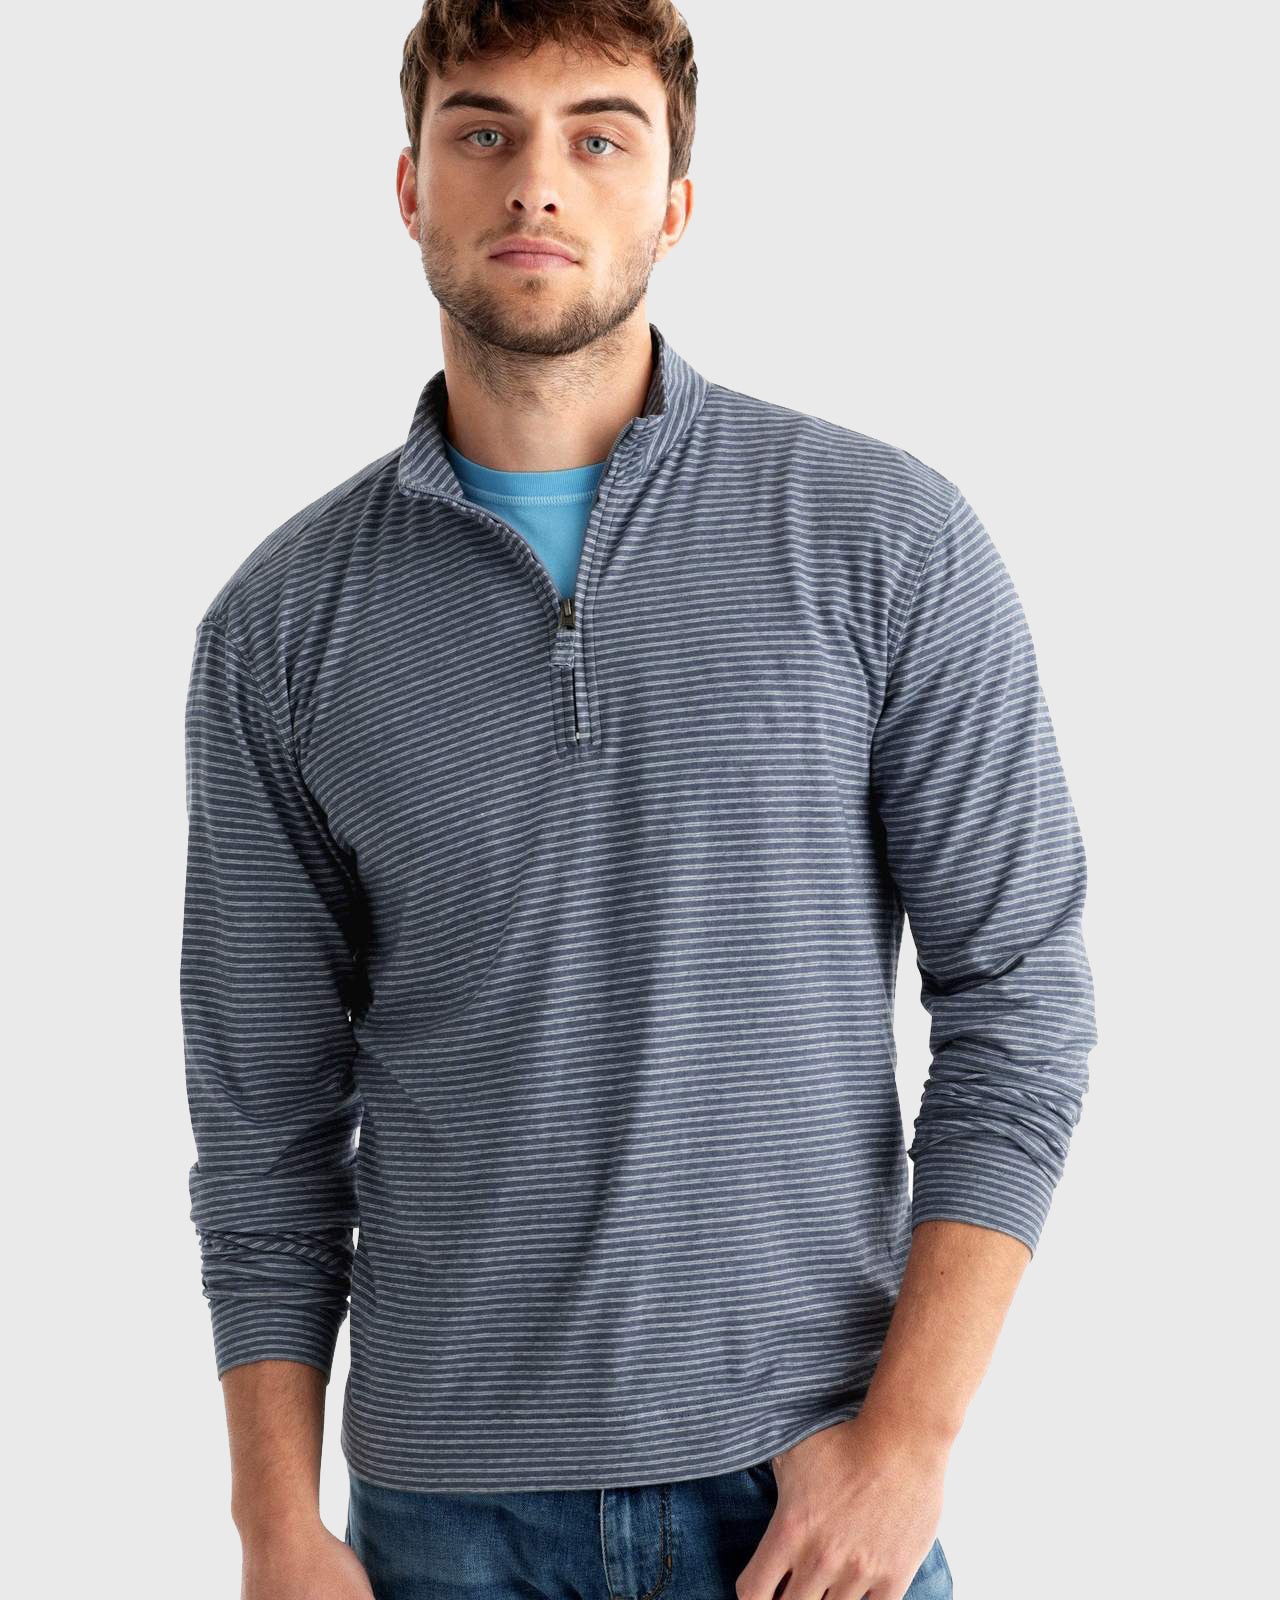 Johnnie-O Men's Harvell Slub Stripe Quarter-Zip Pullover Sweater